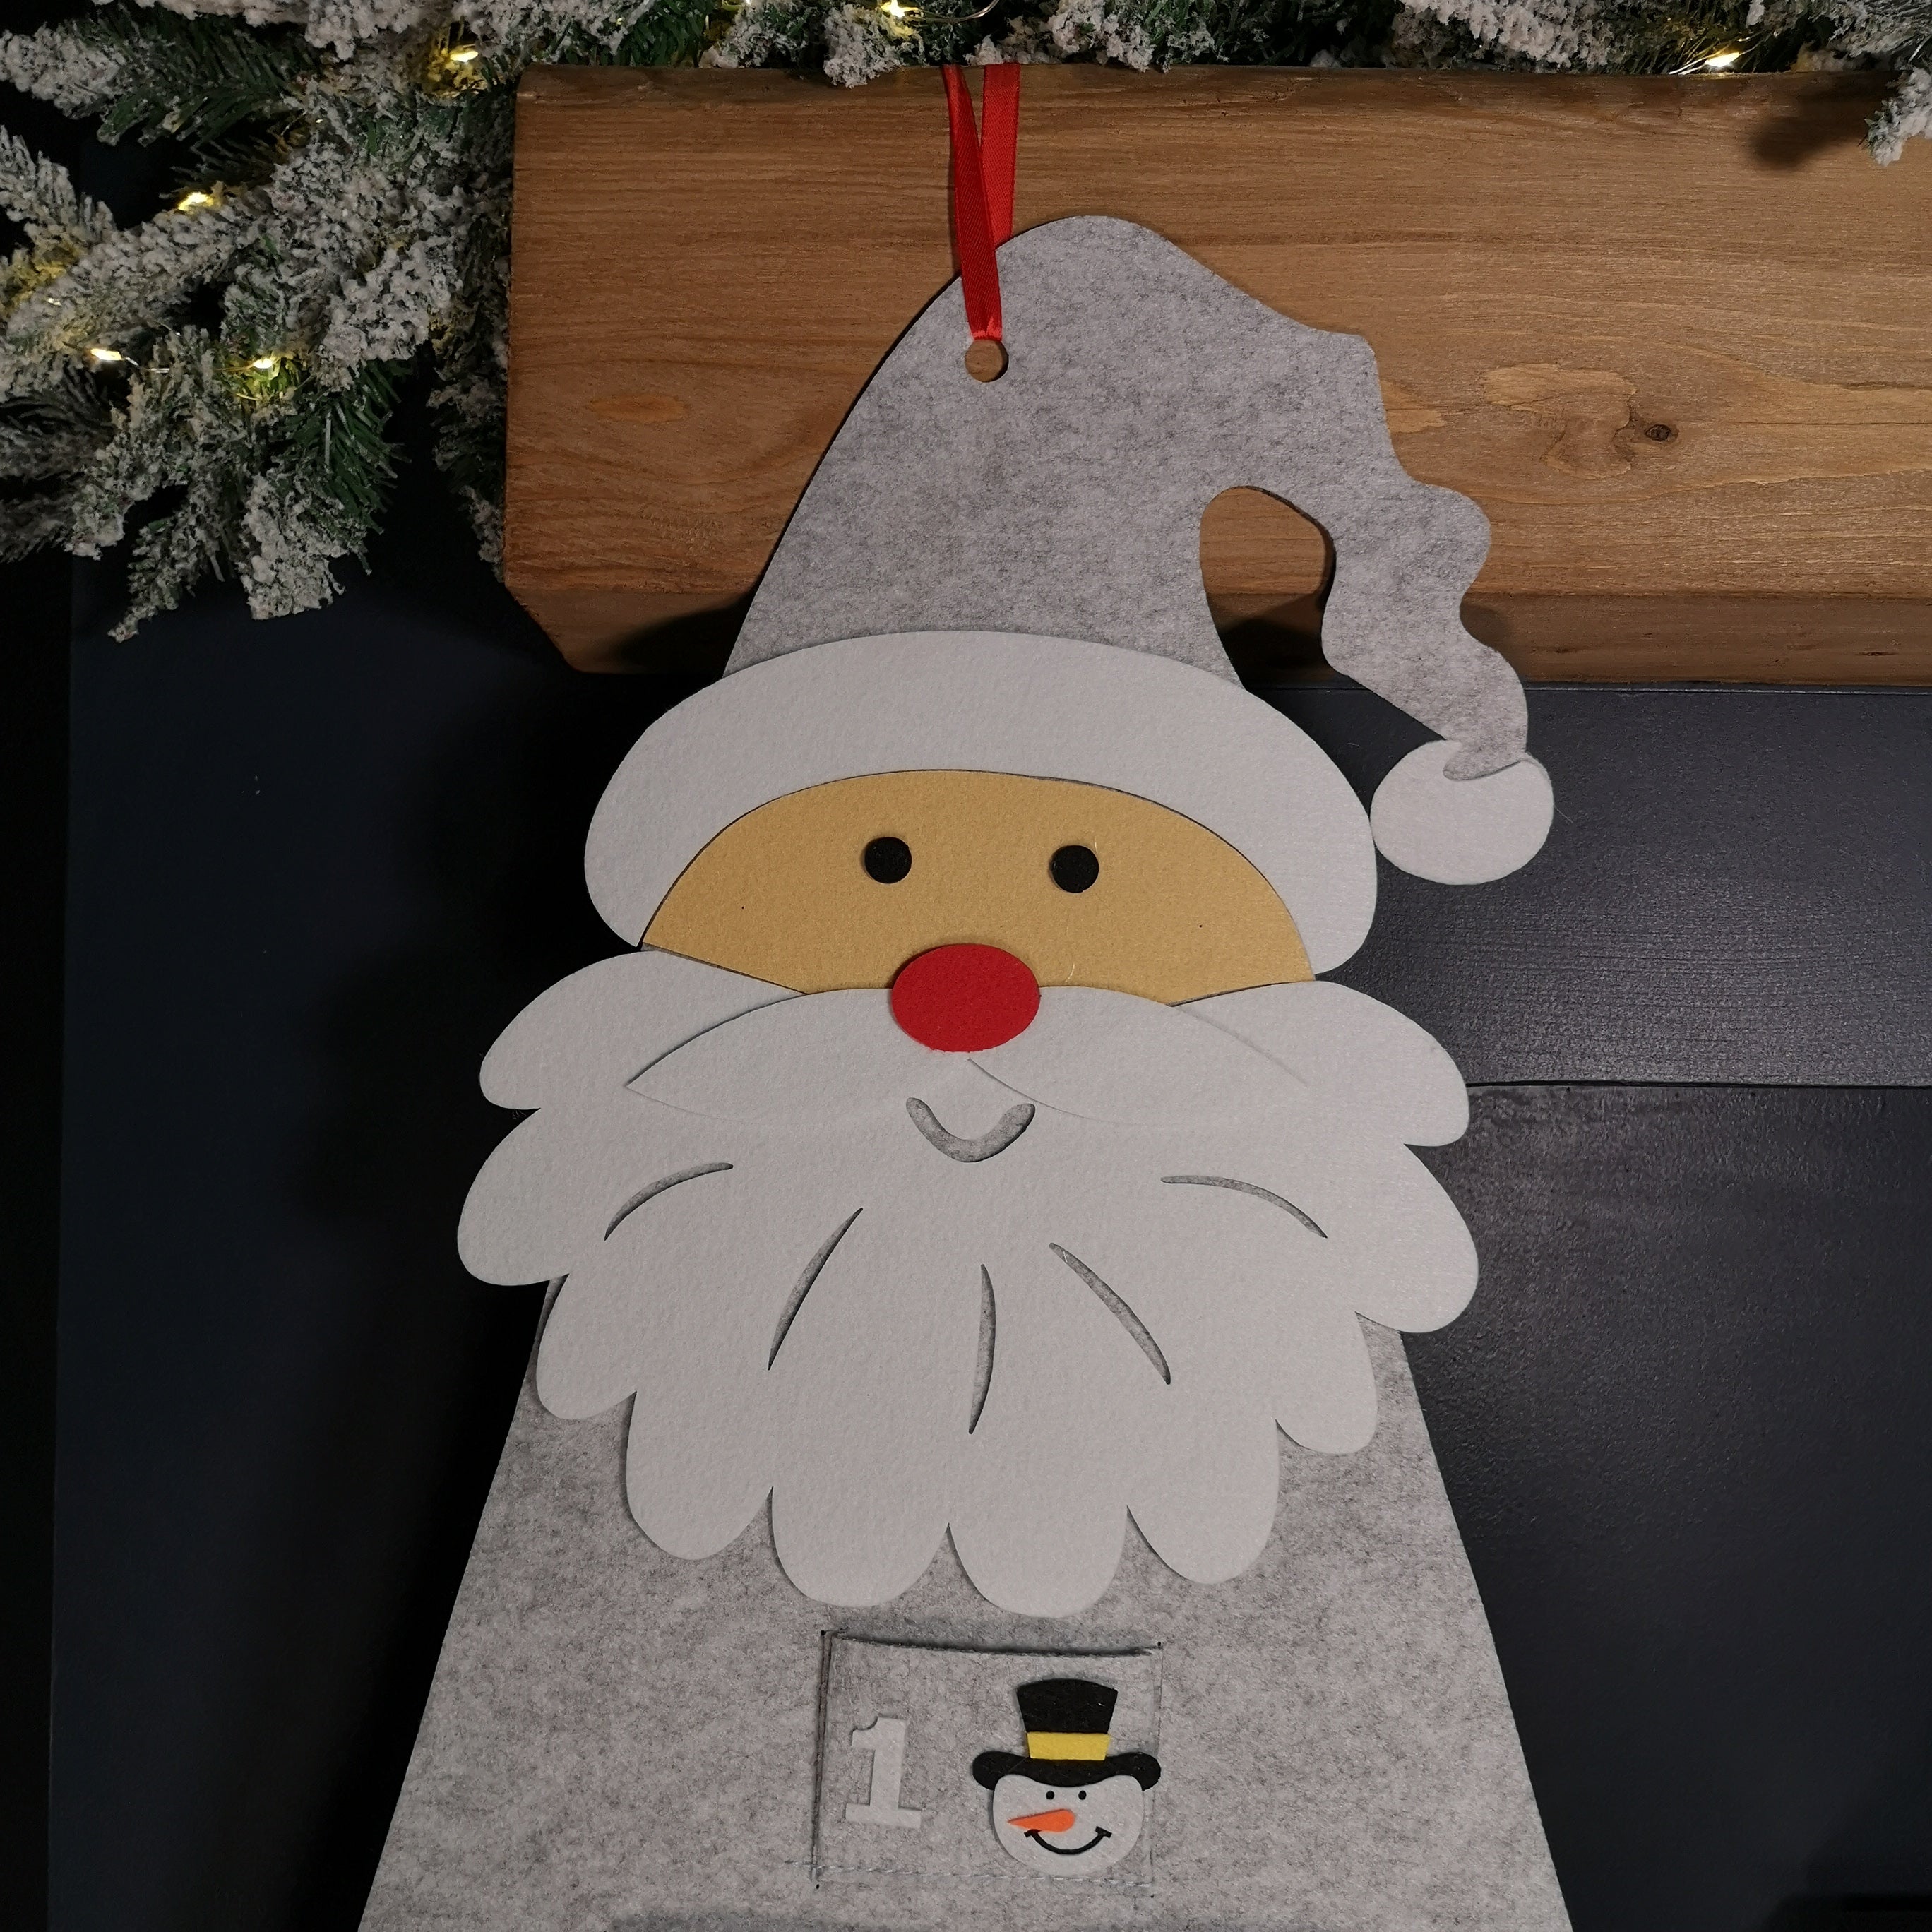 45cm x 115cm Felt Santa Advent Calendar Christmas Decoration in Grey